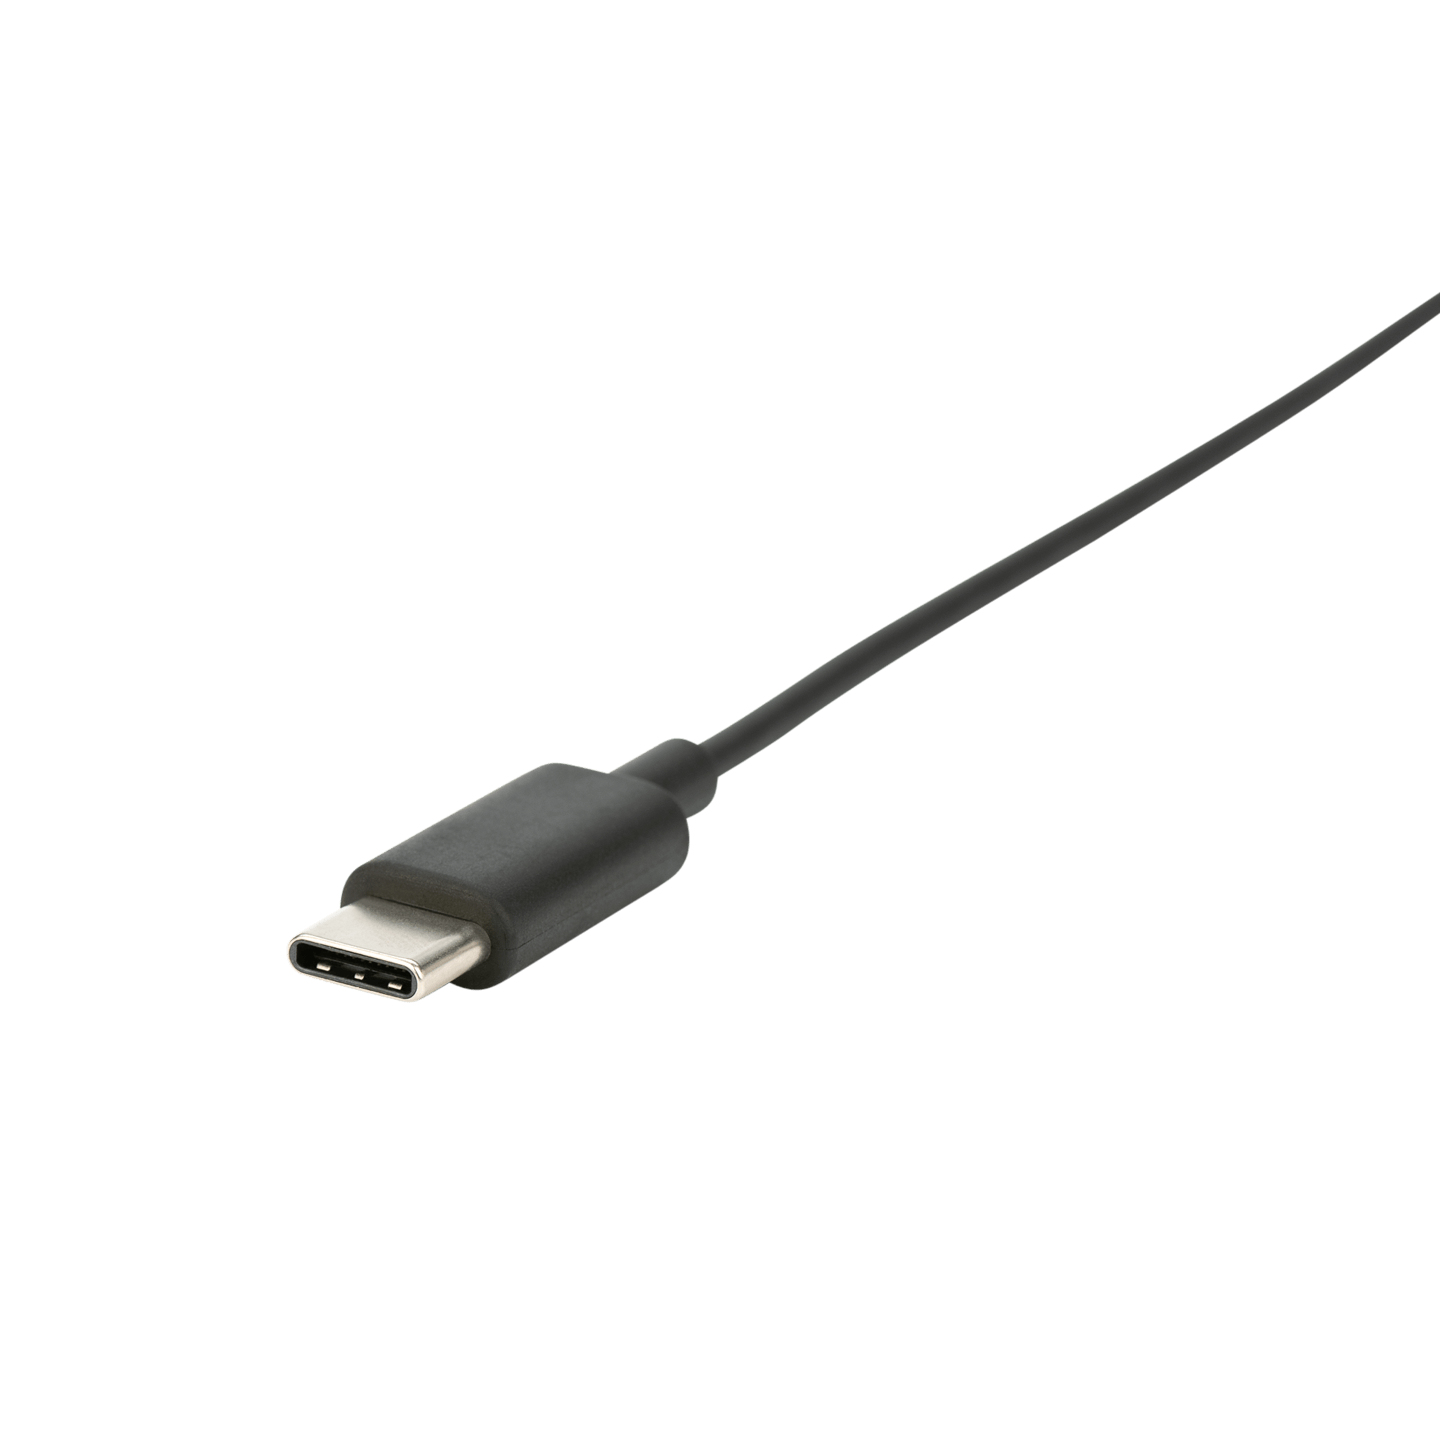 Jabra Evolve 40 UC Mono USB-C Headset Head-band Black